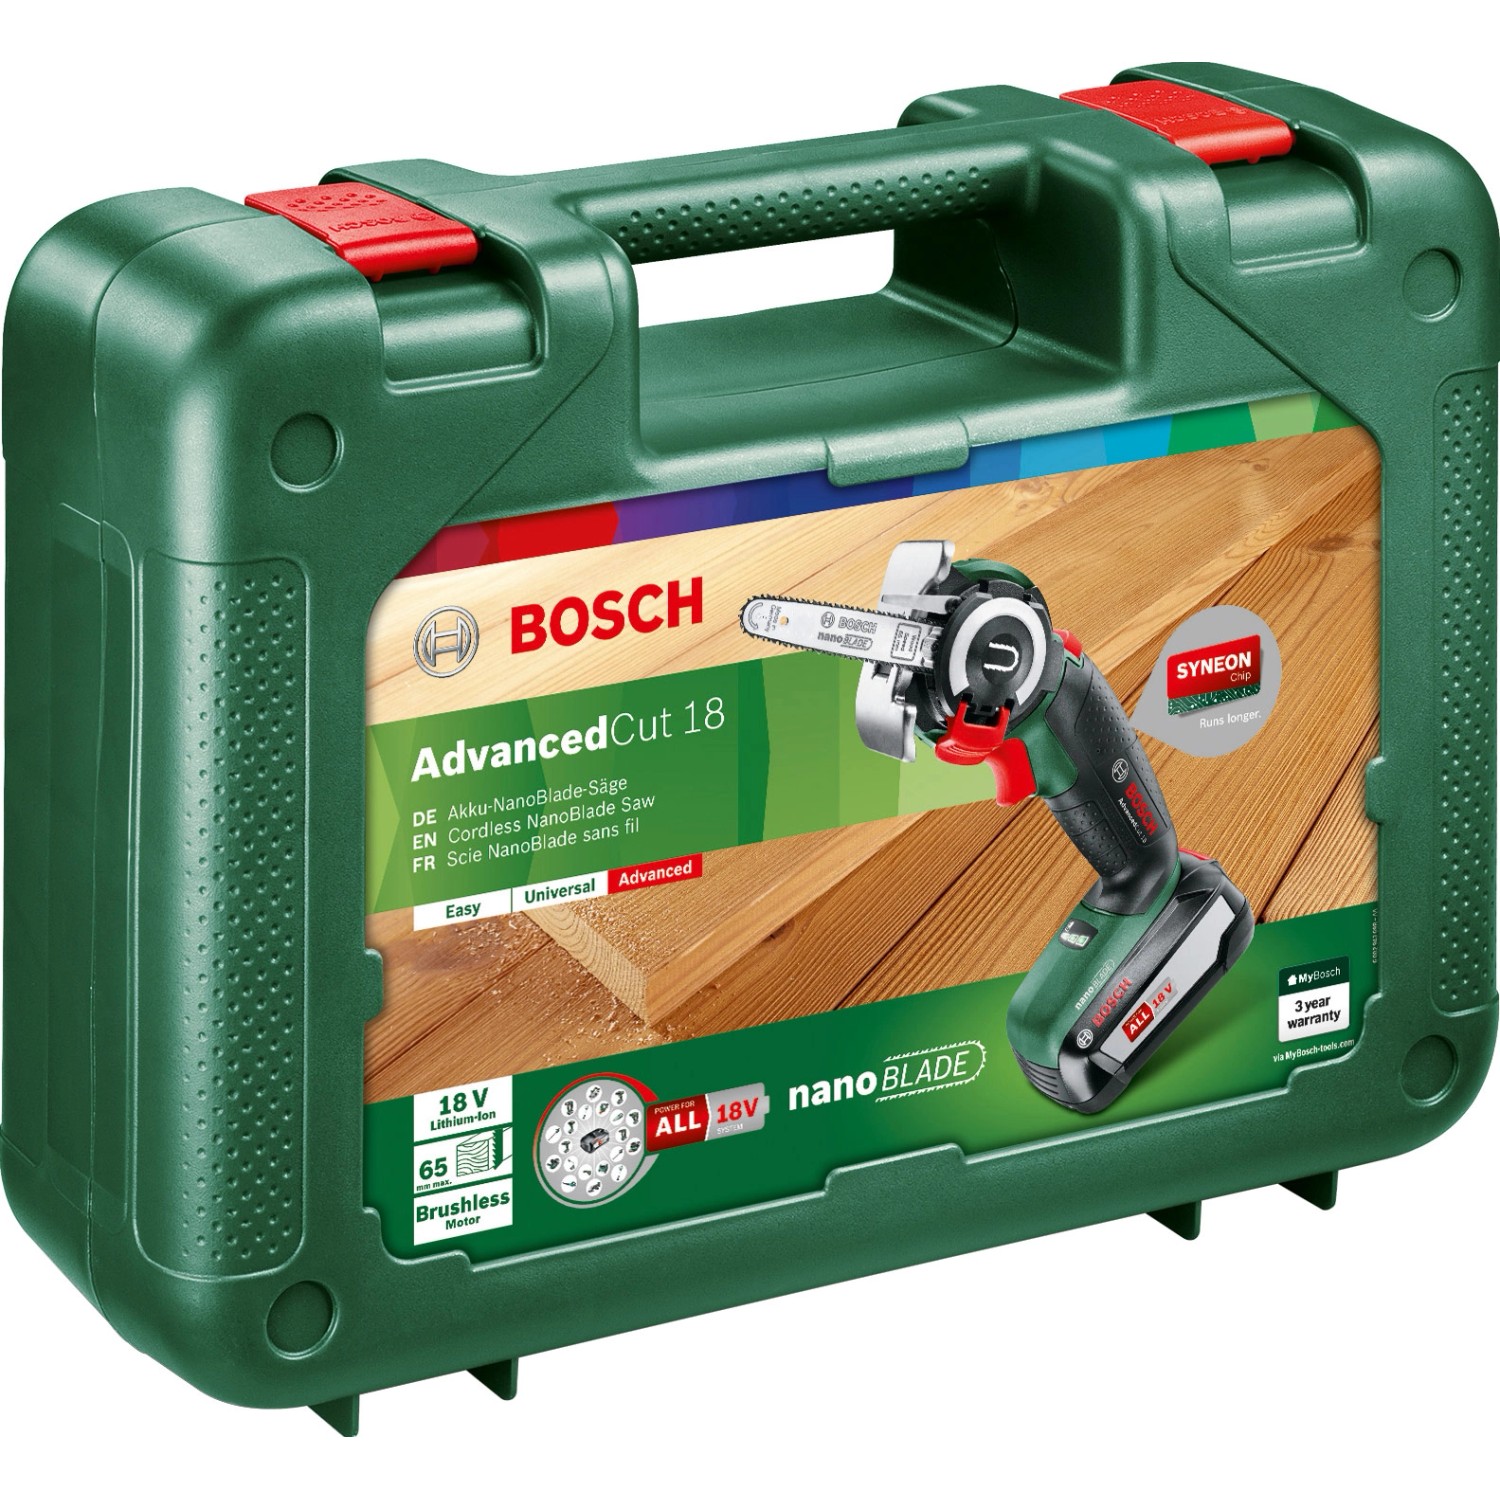 Мини пила с масленкой. Аккумуляторная мини-цепная пила Bosch ADVANCEDCUT 18. Аккумуляторная пила Bosch ADVANCEDCUT 18 (06033d5101). Аккумуляторная мини пила бош 18в. Bosch ADVANCEDCUT 18 Set.